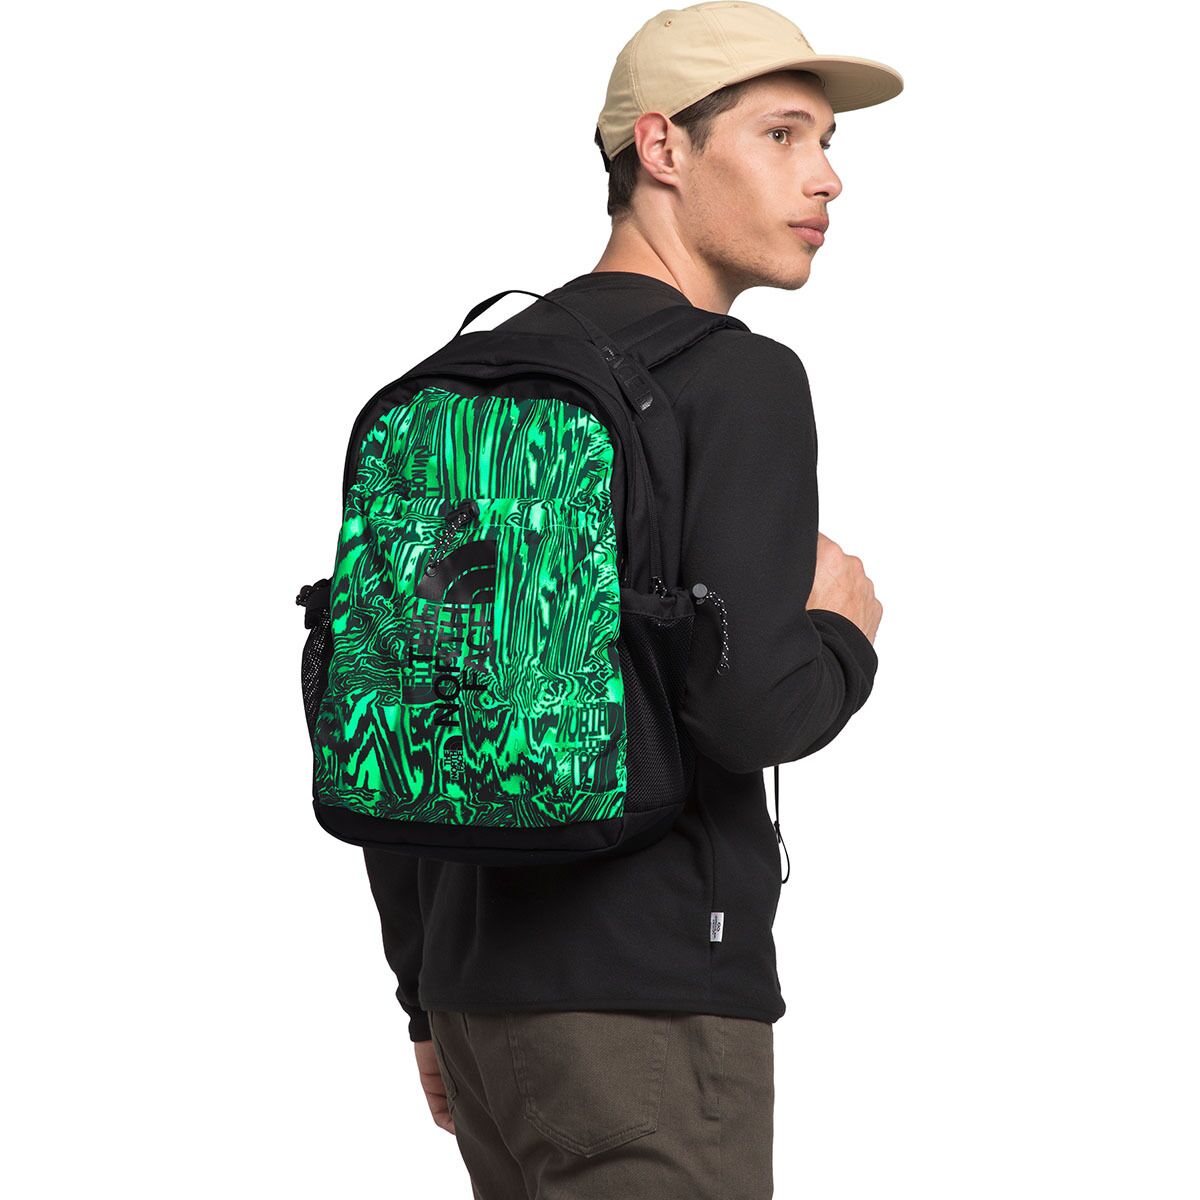 Рюкзак Bozer The North Face, цвет Chlorophyll, зеленый/черный рюкзак the north face bozer backpack черный